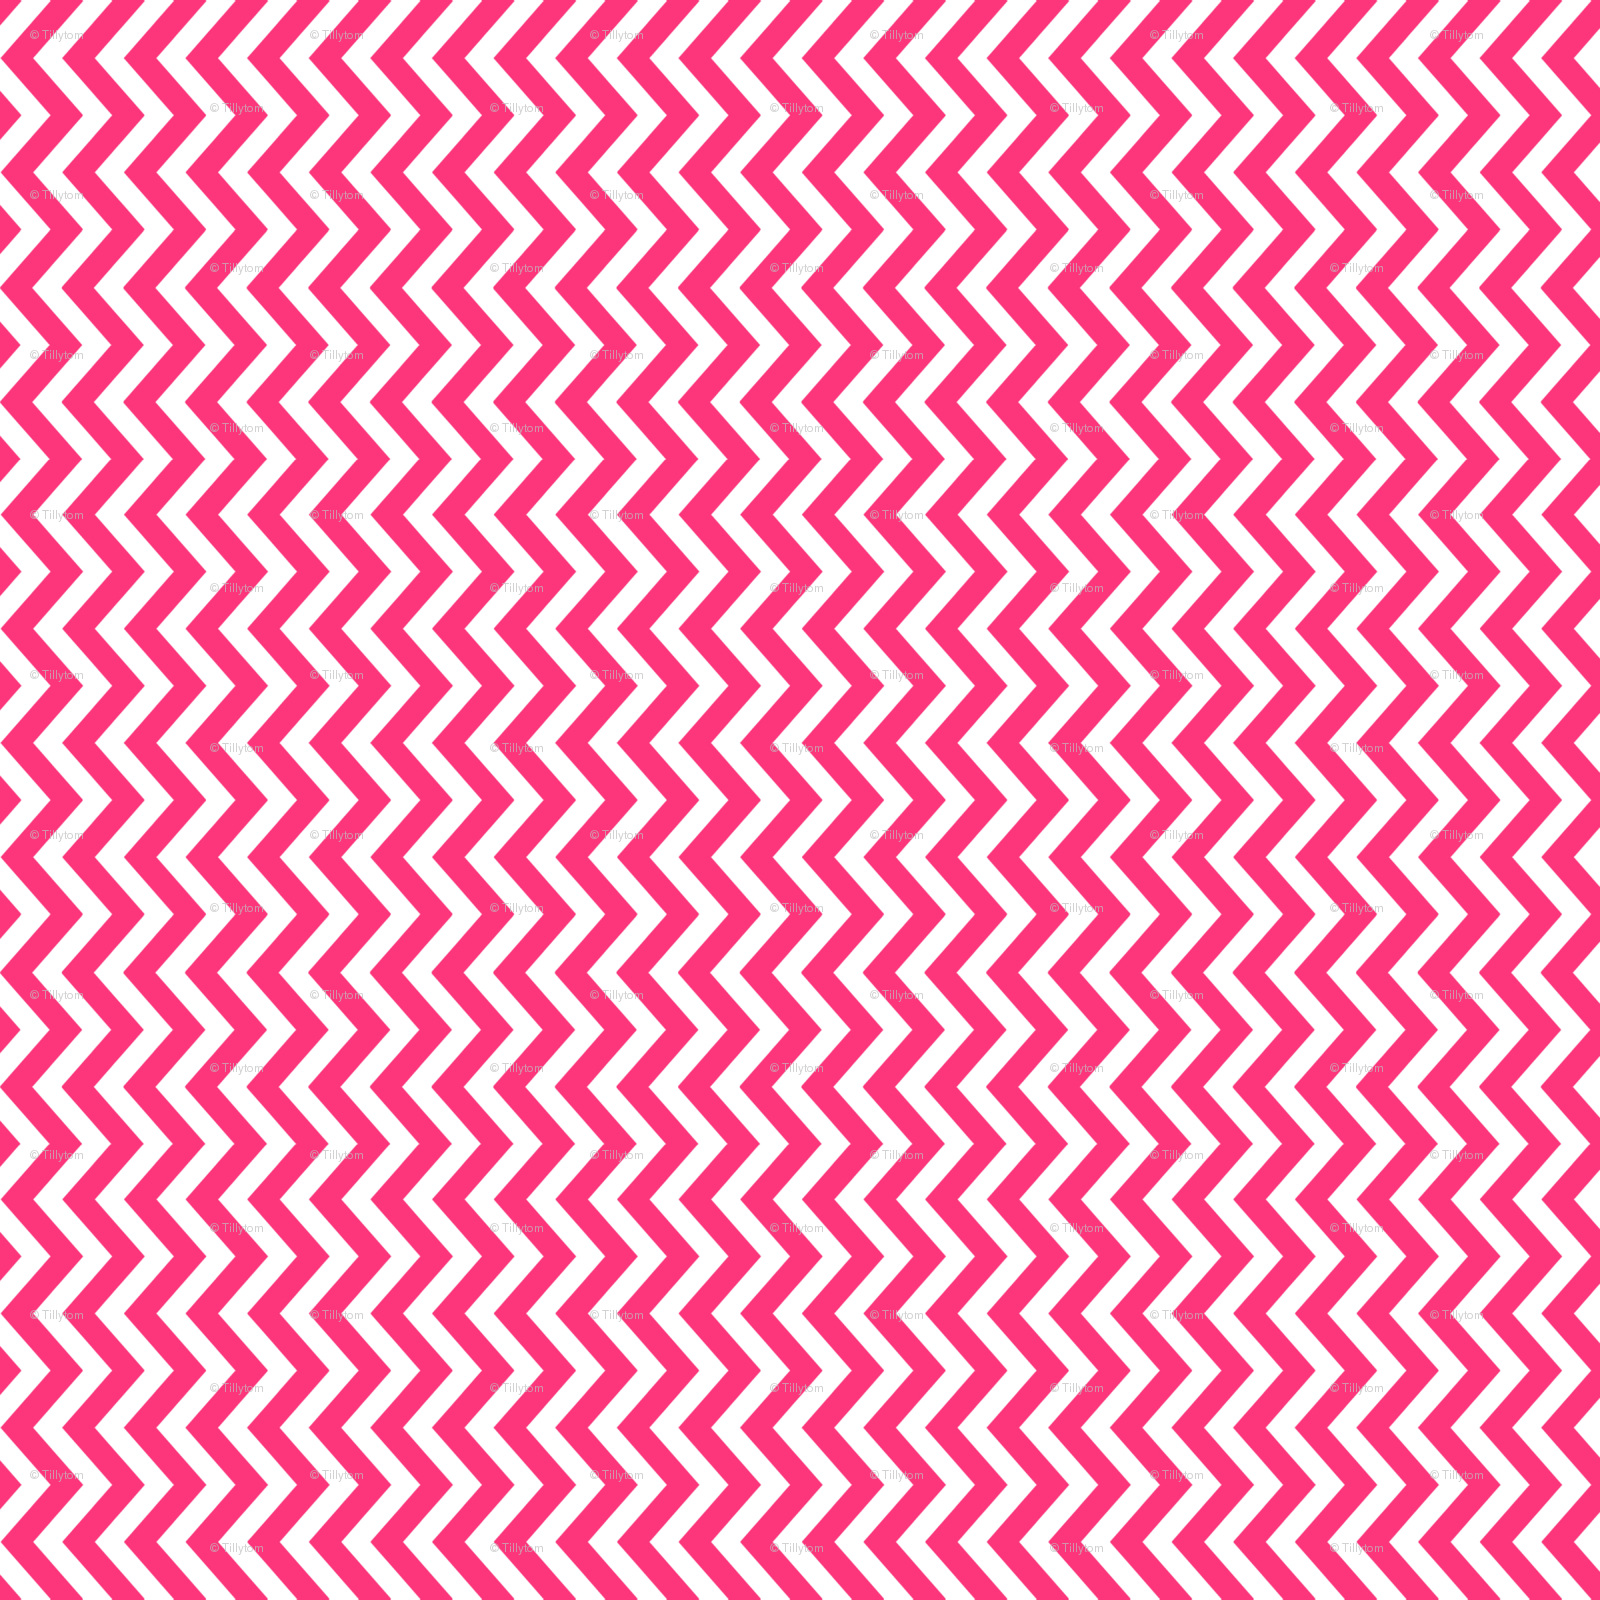 Pink Chevron Wallpaper - WallpaperSafari